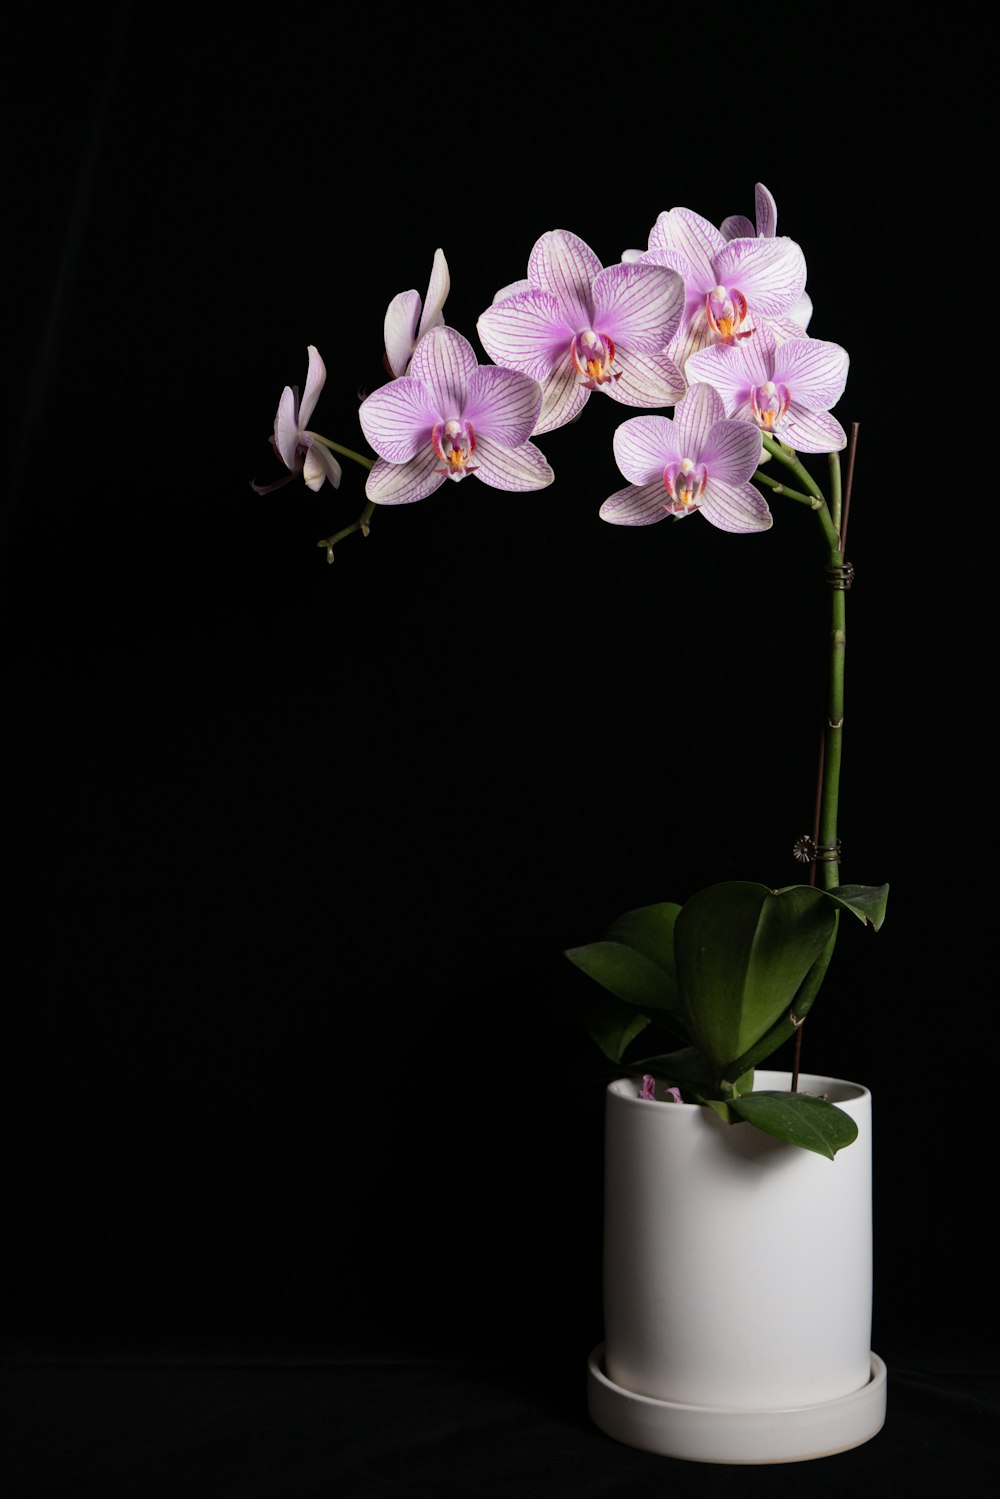 purple and white orchids in white ceramic vase